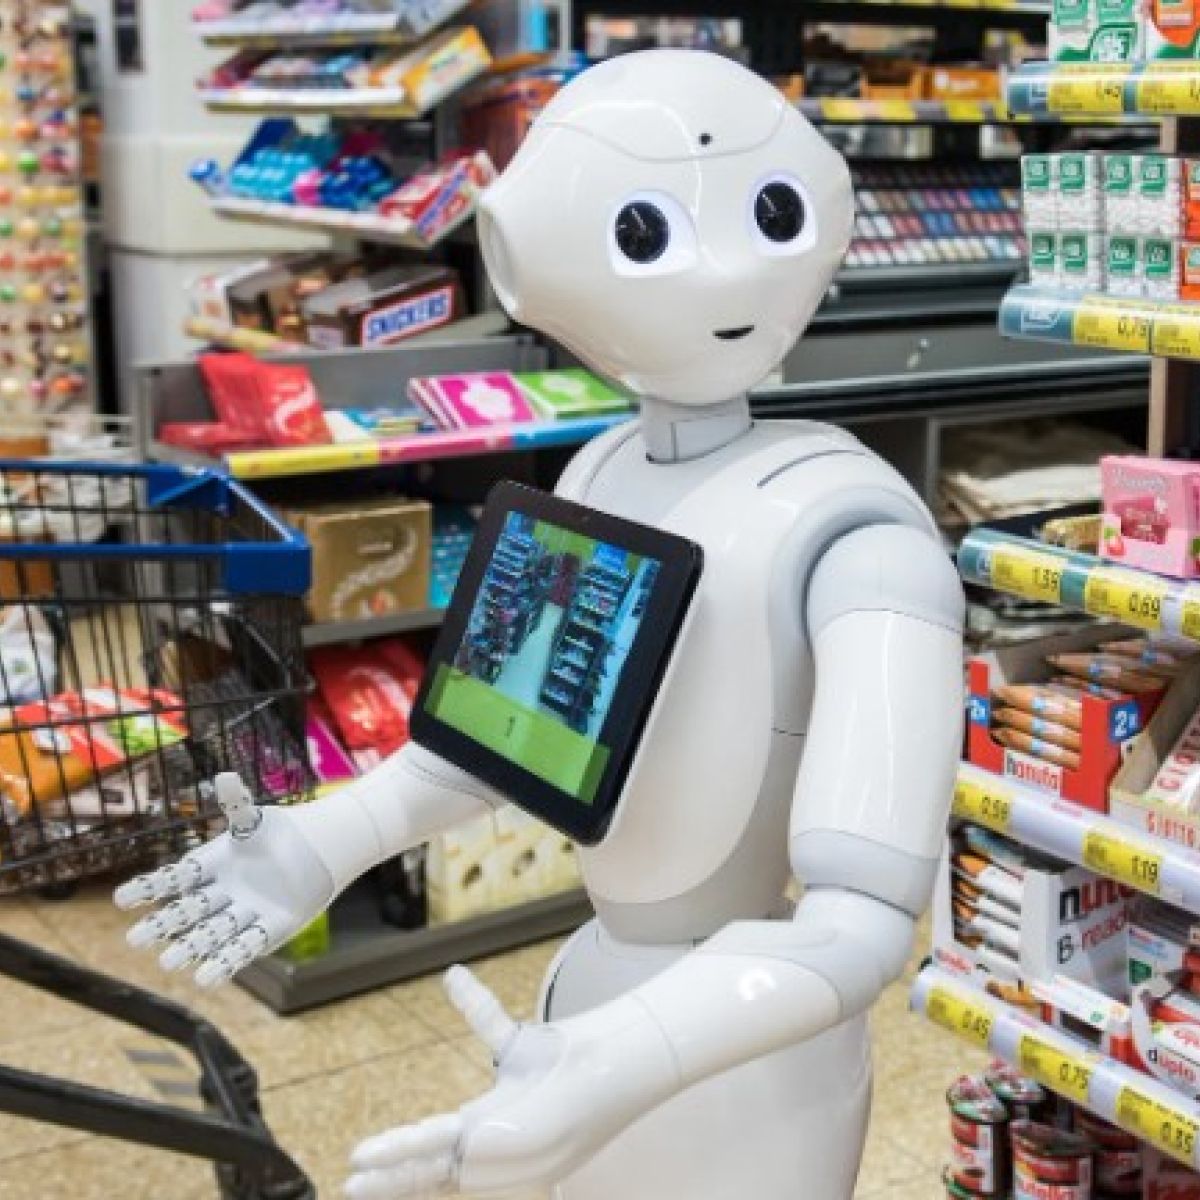 robot-collborativi-negozi-supermercati.